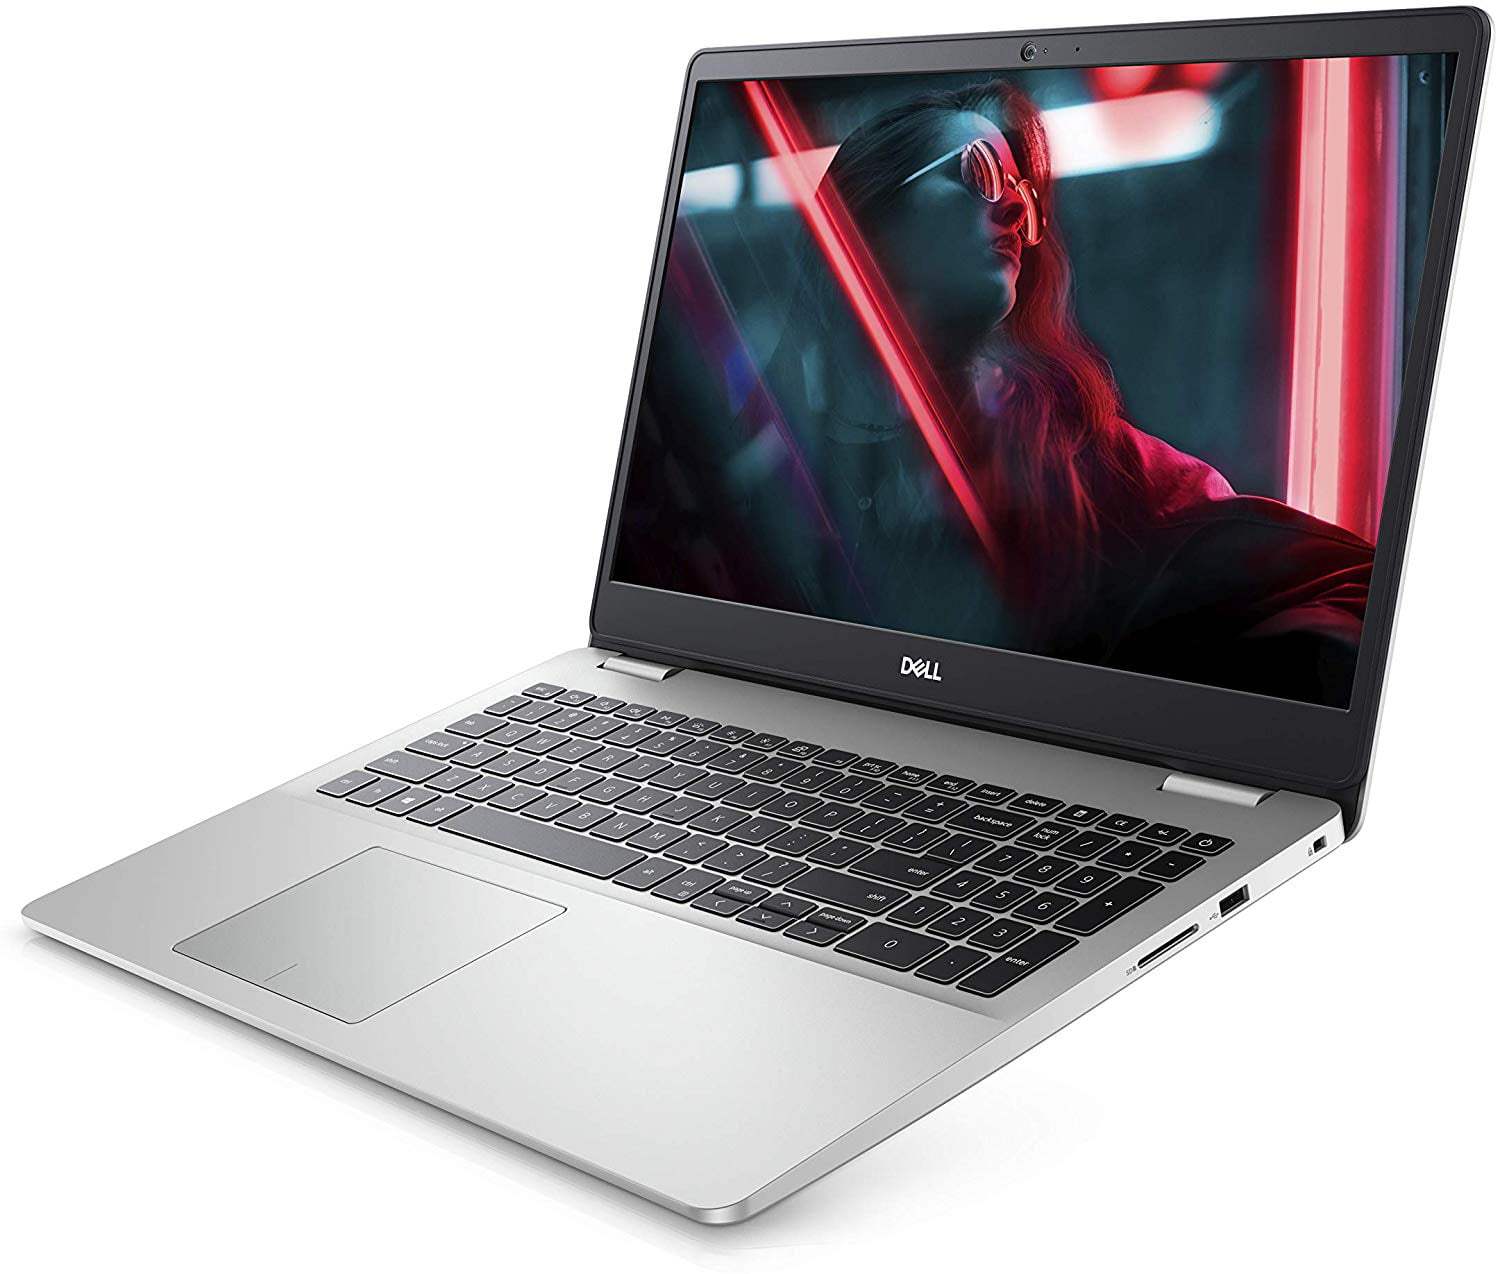 Dell Inspiron 15 Laptop: 10th Gen Core i5-1035G1, 256GB SSD, 8GB RAM, 15.6